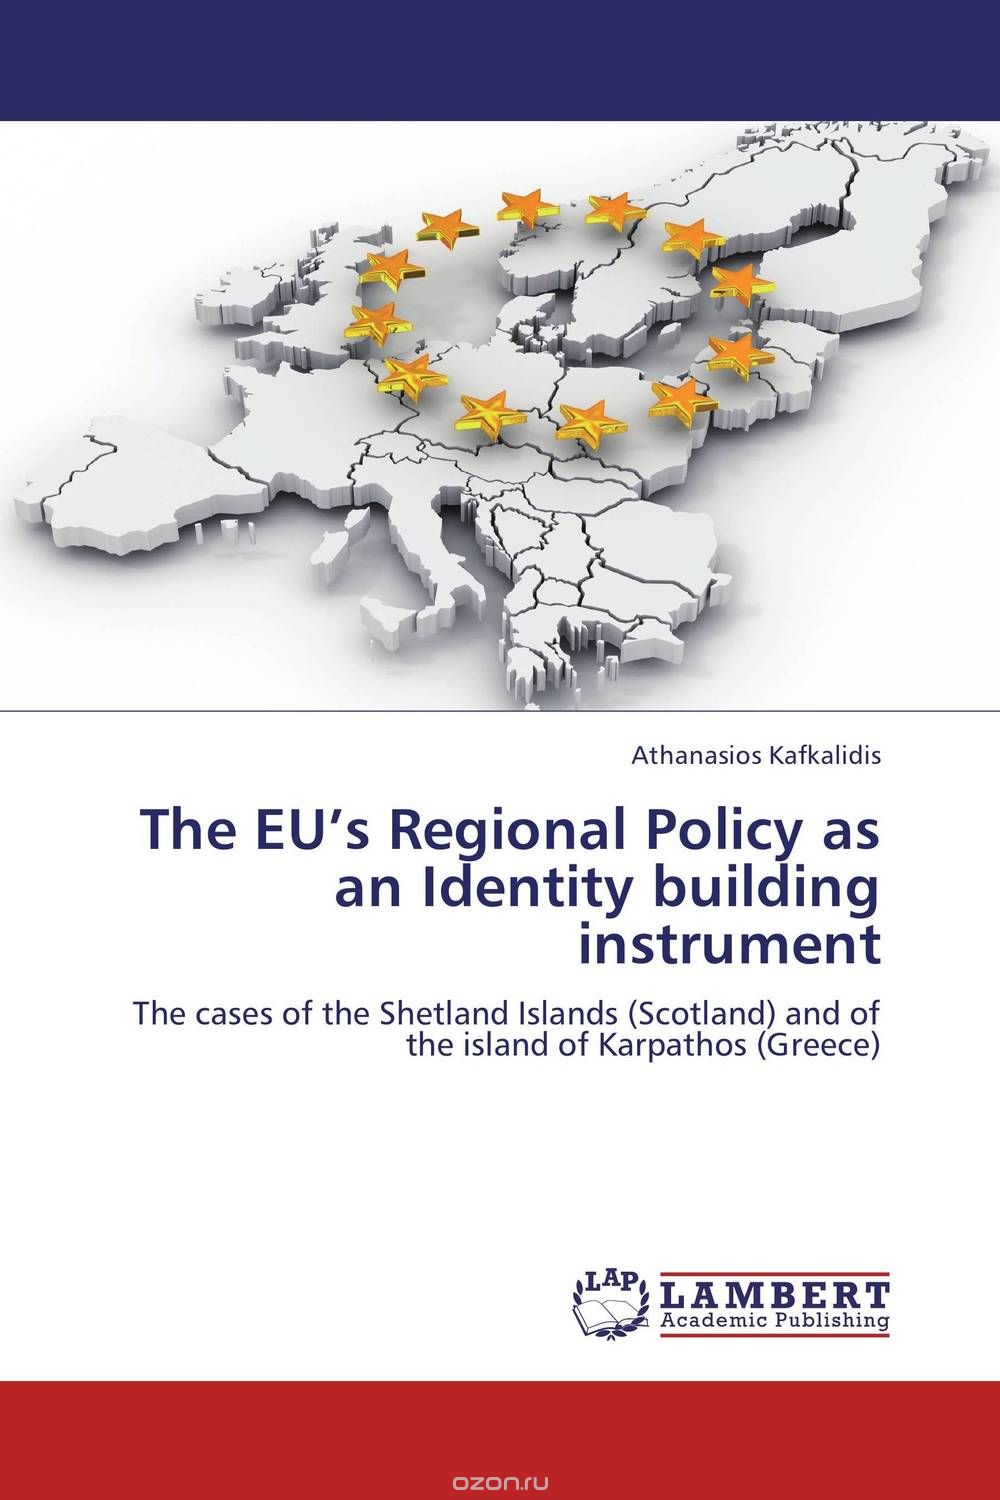 Скачать книгу "The EU’s Regional Policy as an Identity building instrument"